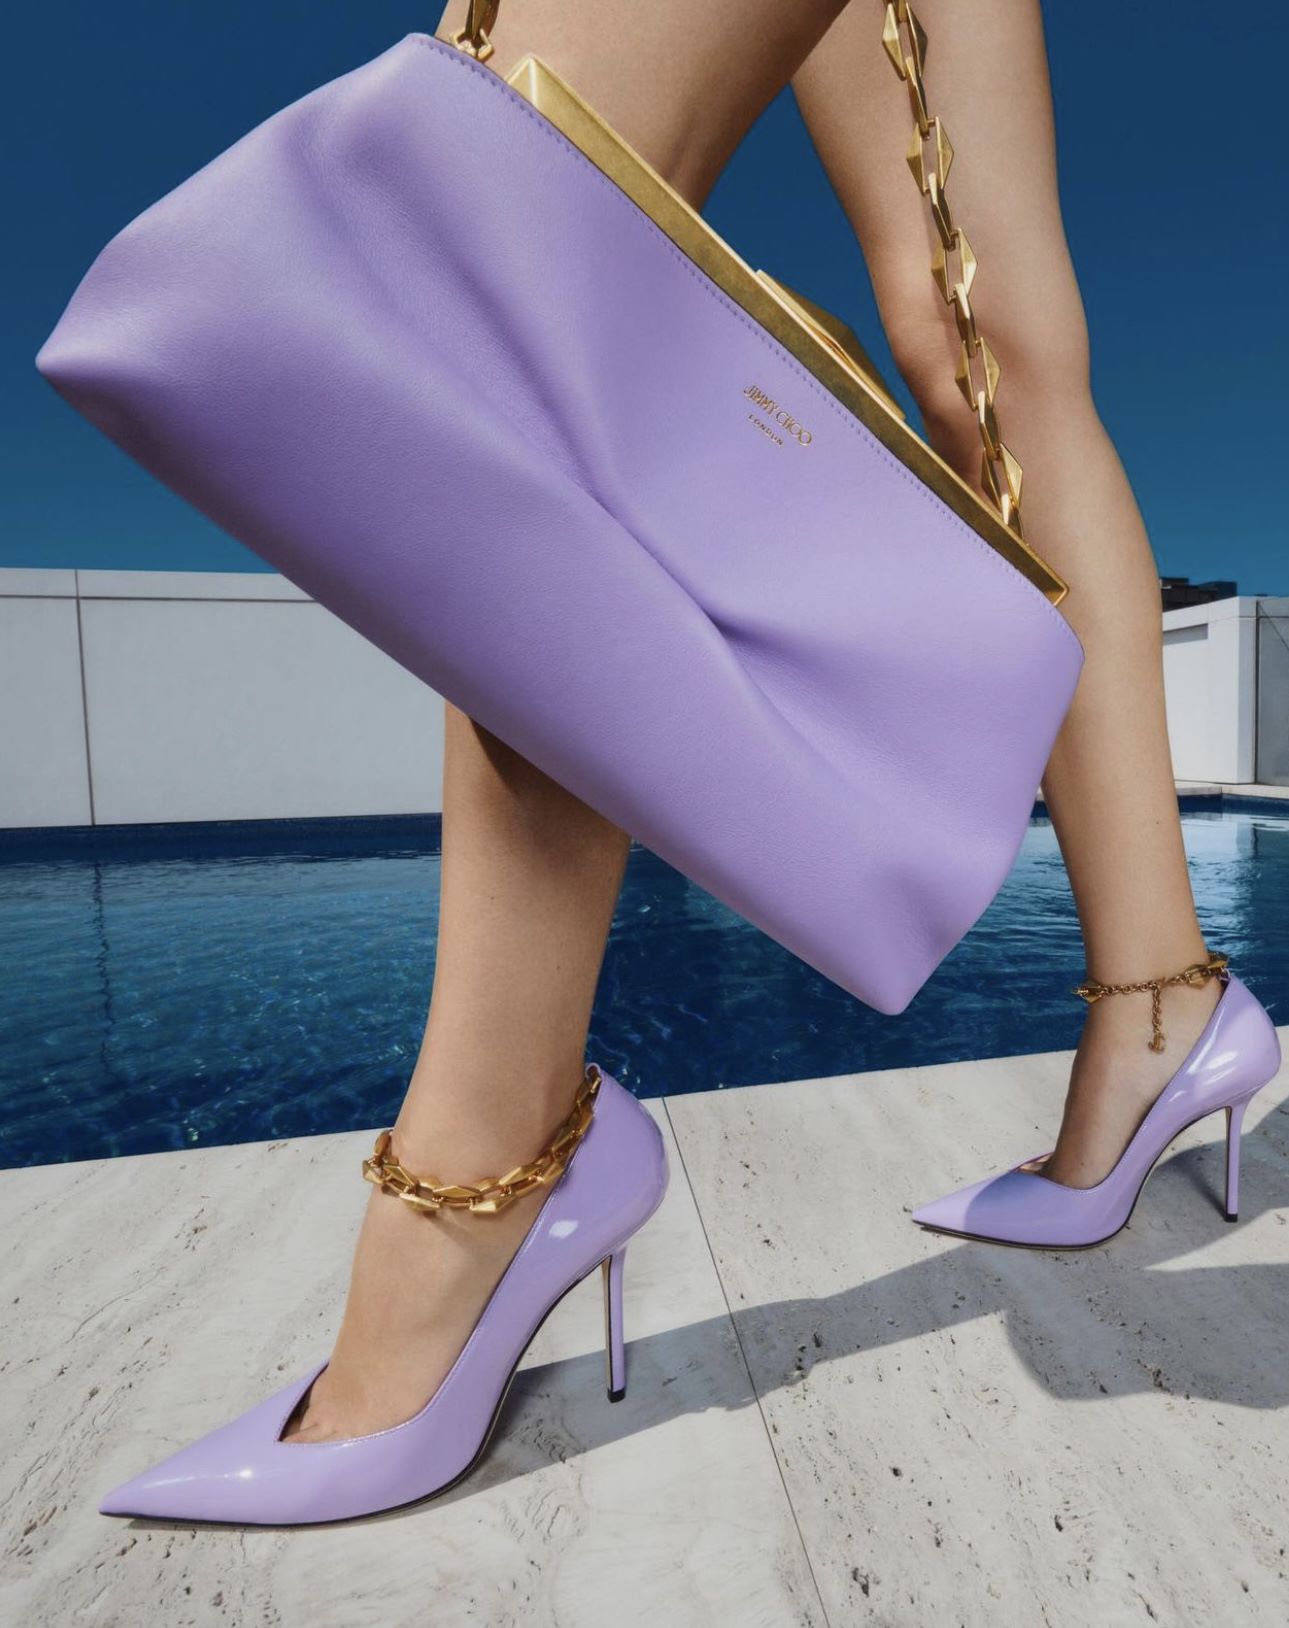 Lilac Jimmy Choo heels and purse